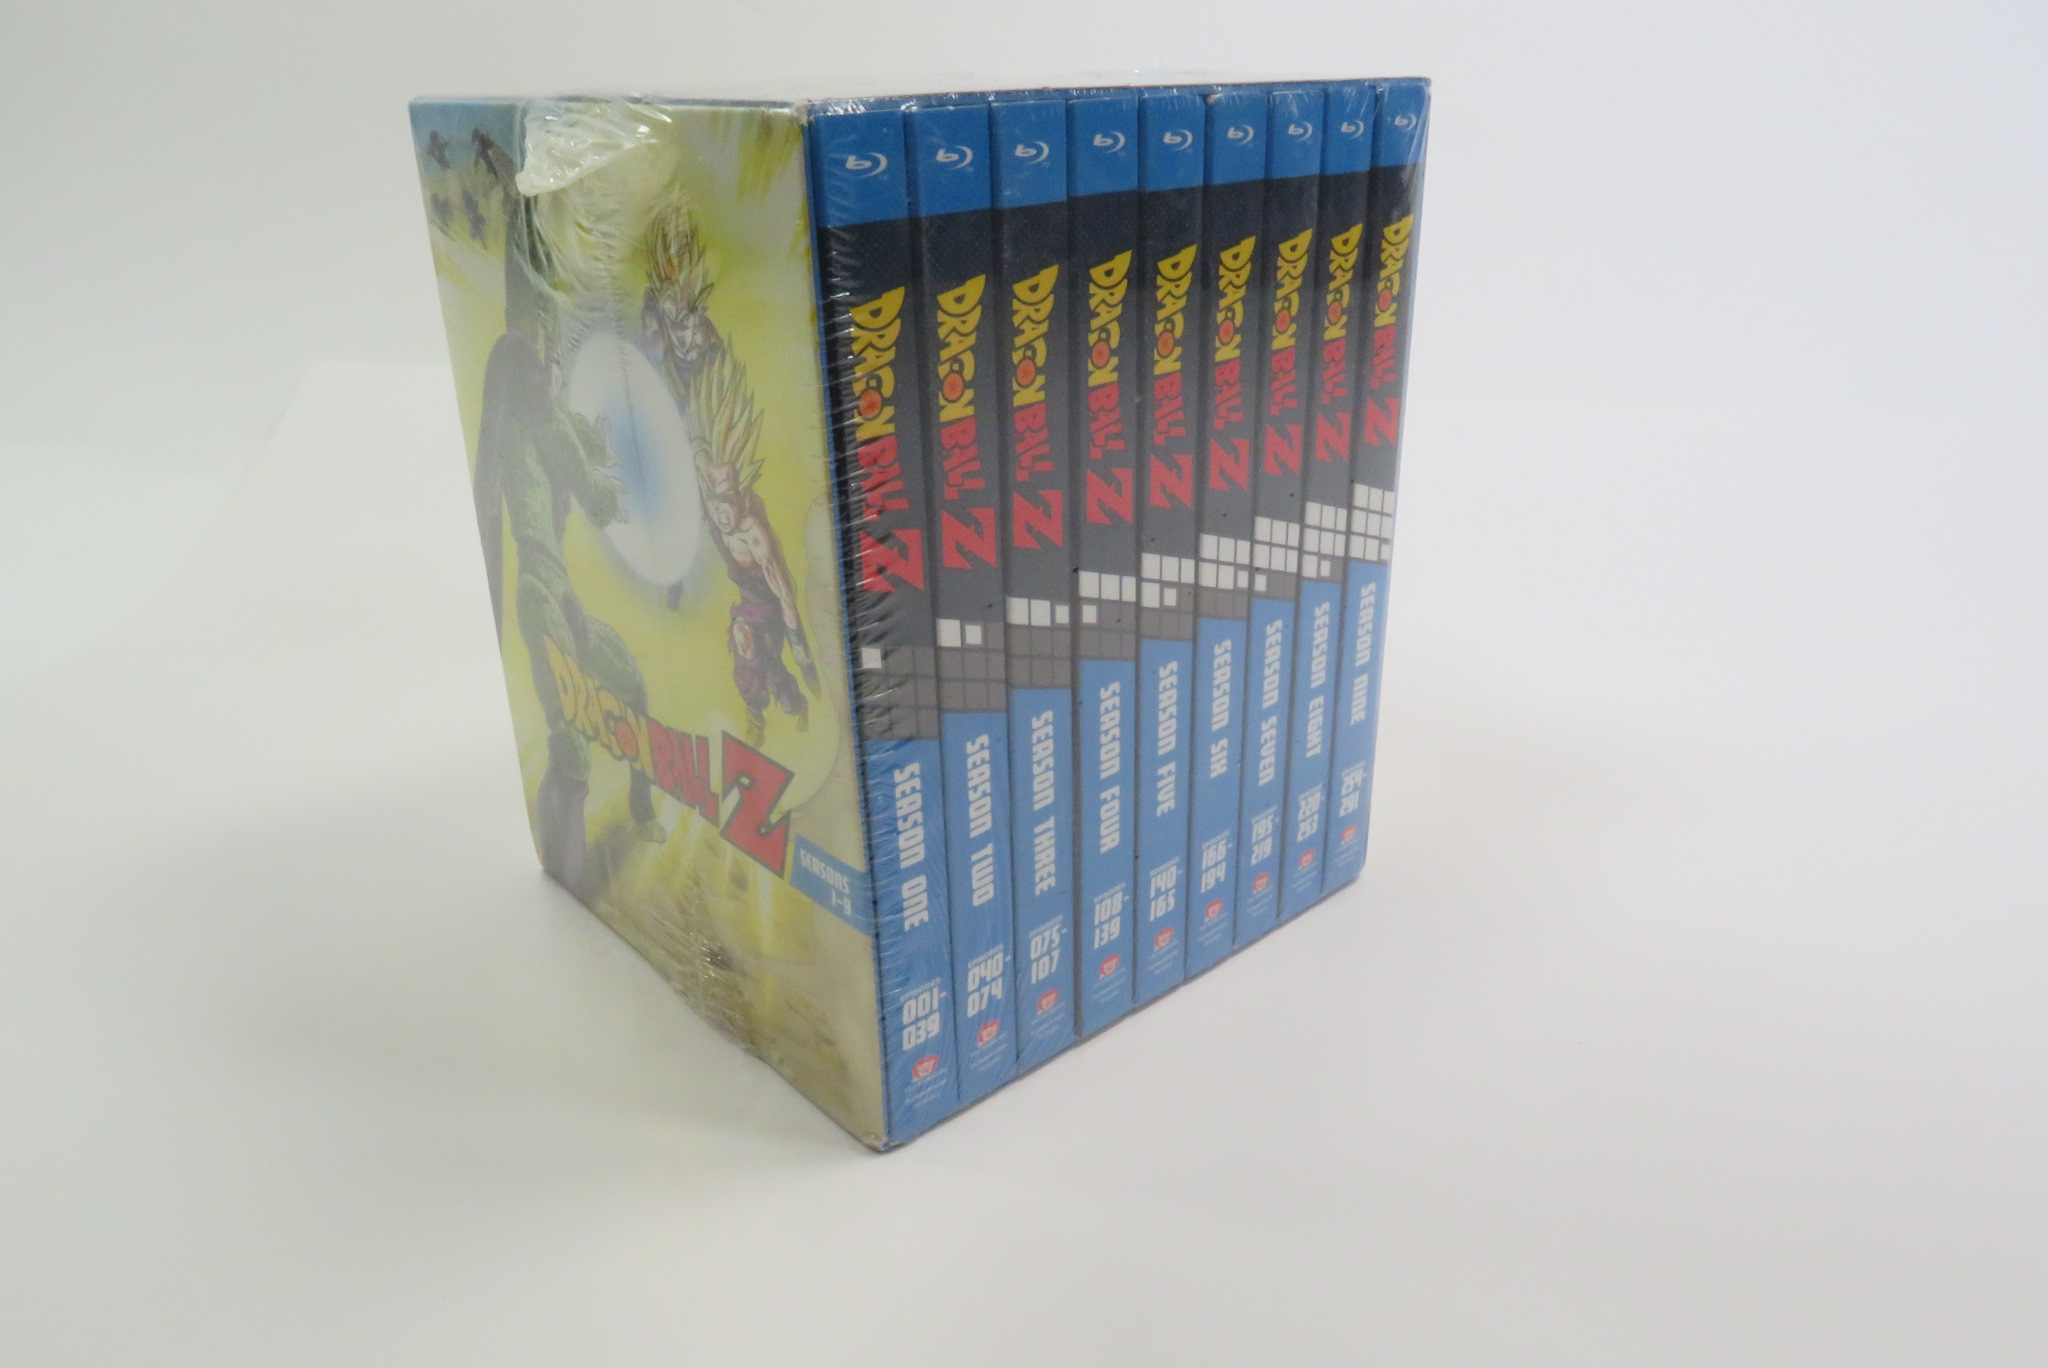 Dragon Ball Z Season 1 Blu-Ray Episode 1-39 Four Discs Funimation Saiyan  Saga